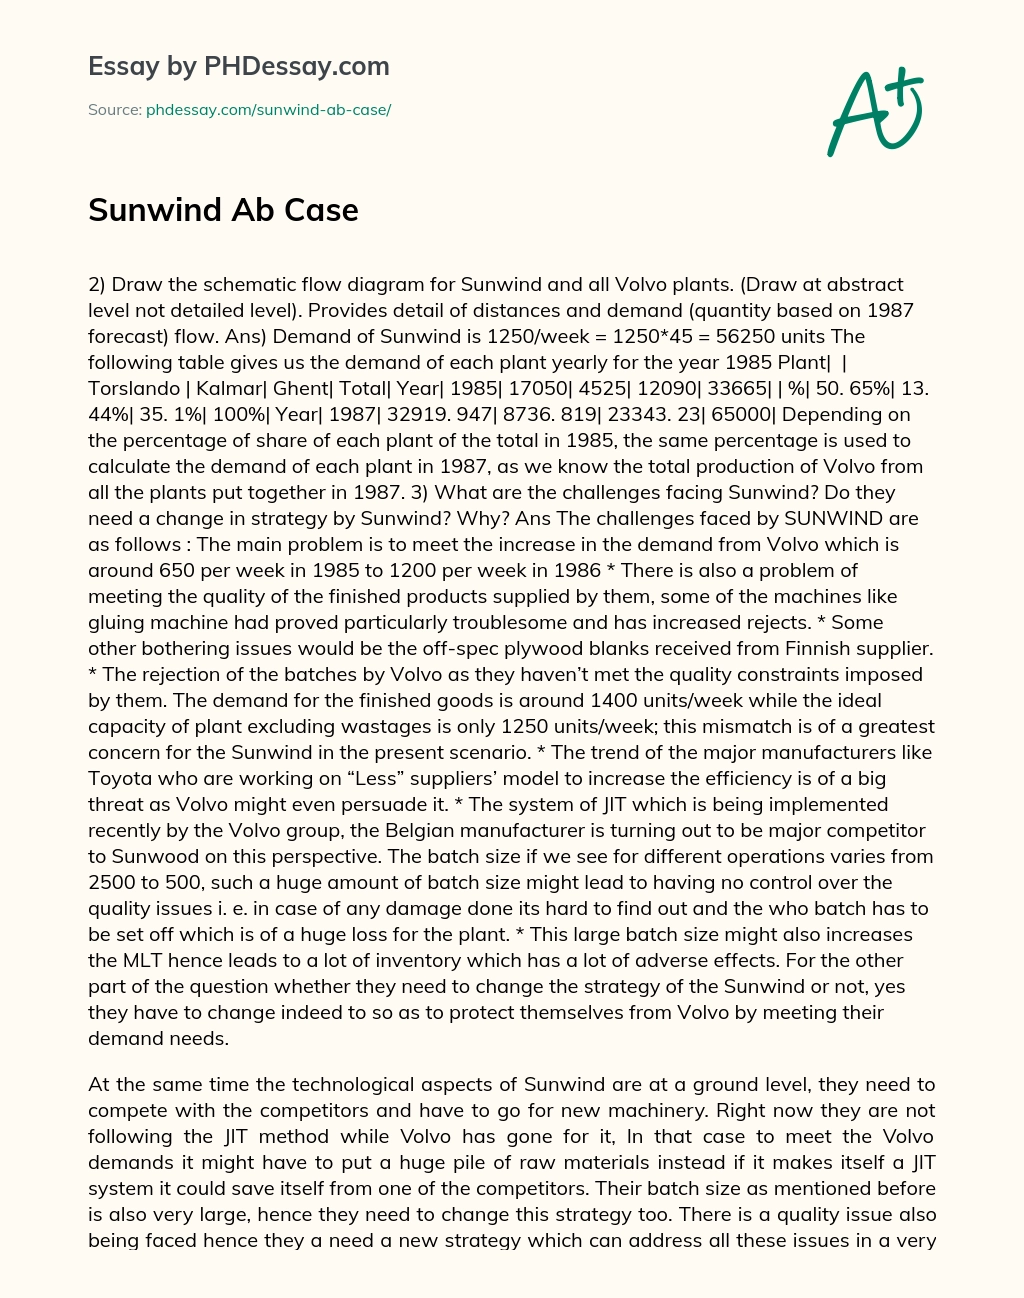 Sunwind Ab Case essay